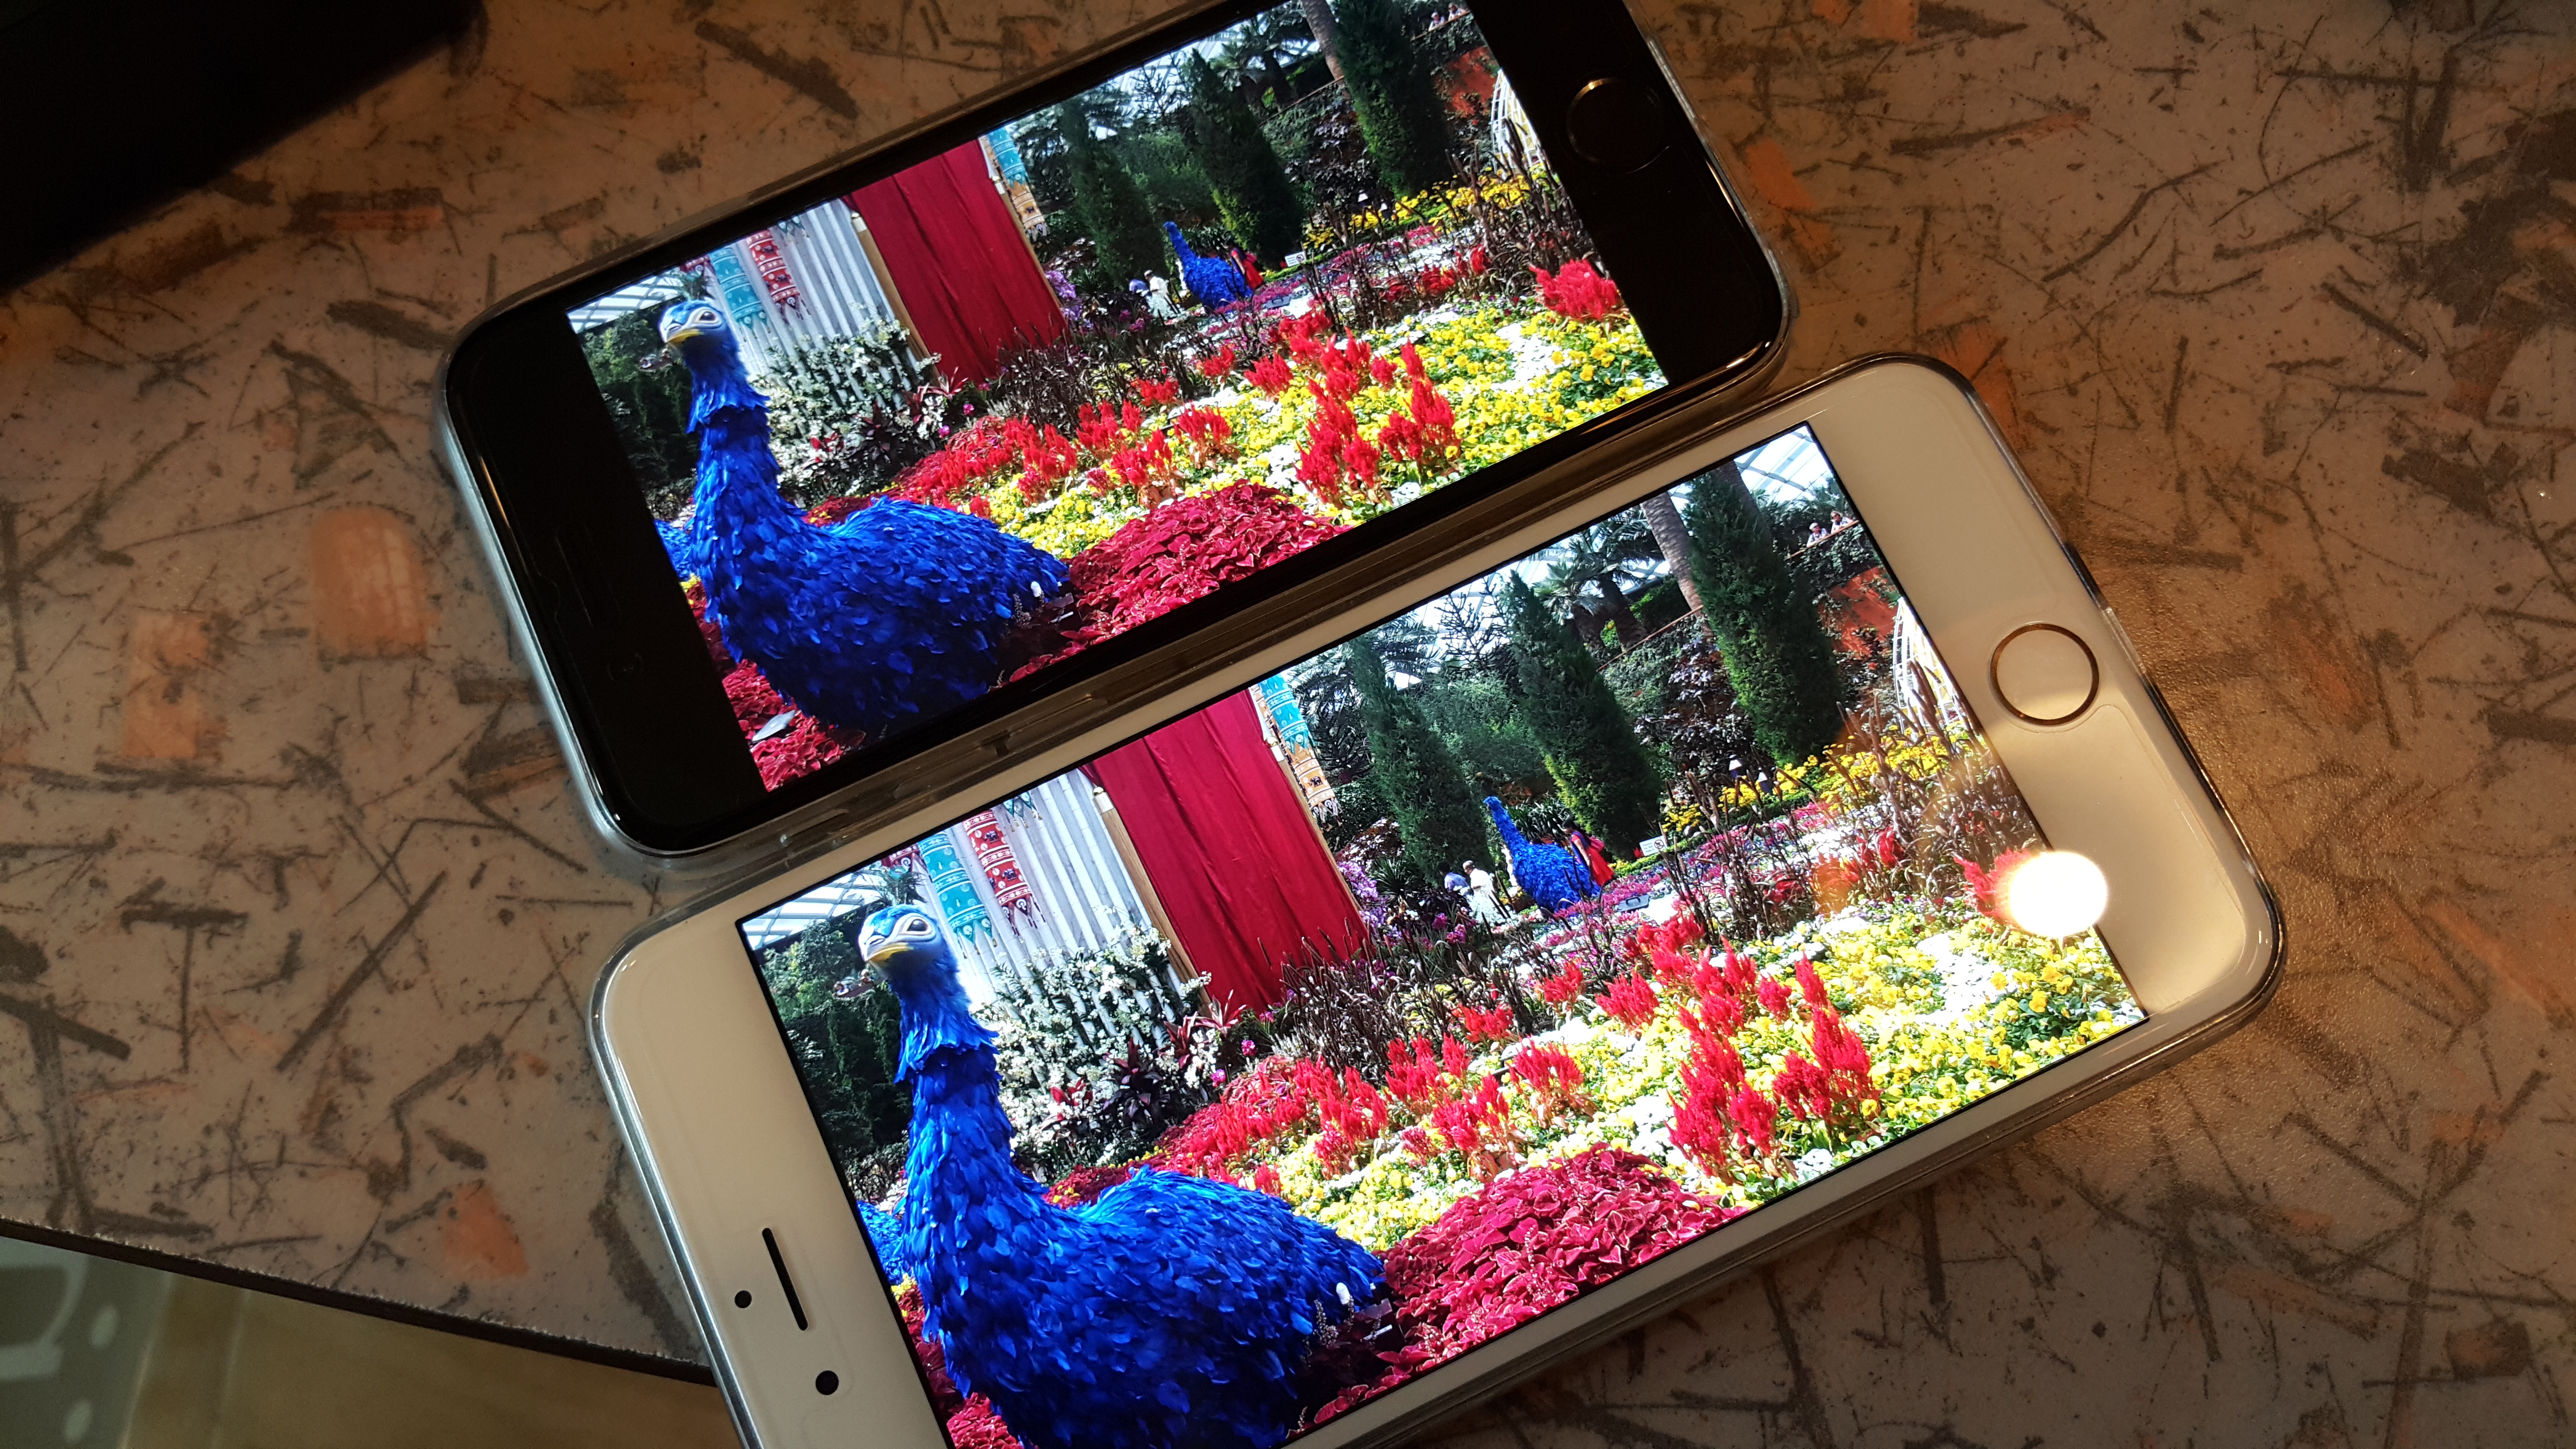 20141105 140949 | iPhone 6 | Appdisqus Compare: เทียบระบบกันสั่น ของกล้อง iPhone 6 และ iPhone 6 Plus เห็นผลต่างที่ควรพิจารณา